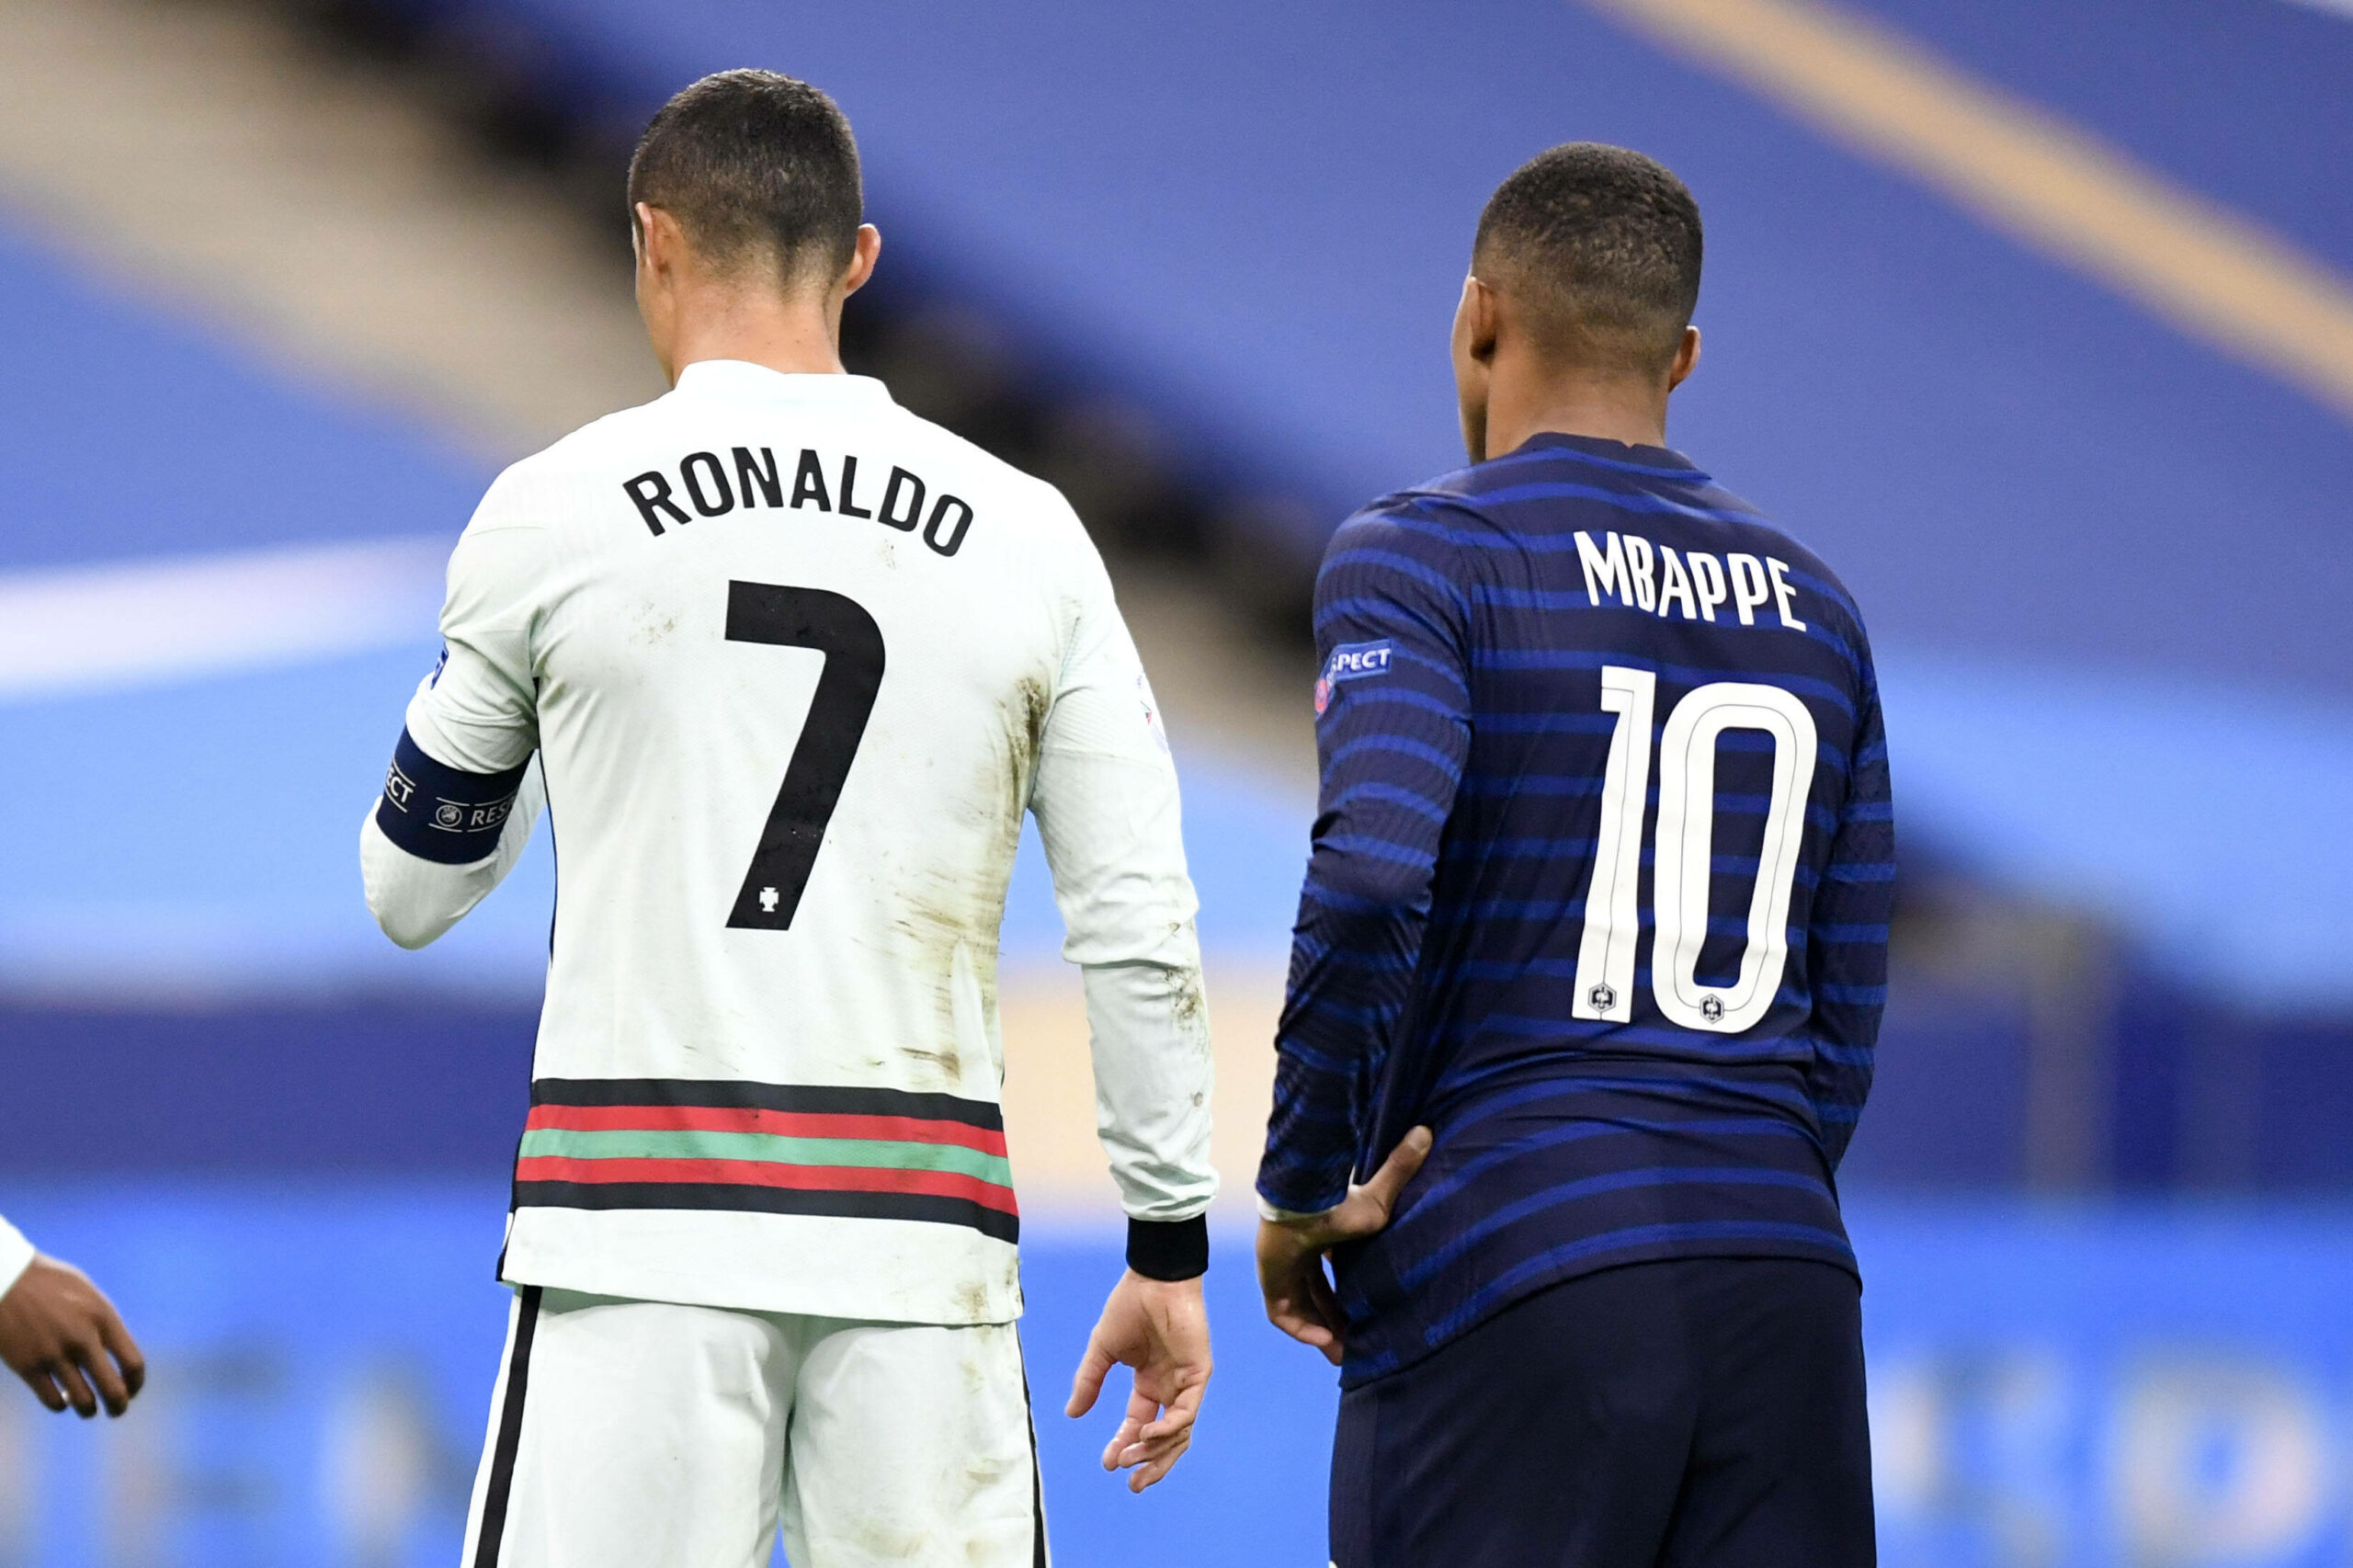 Cristiano Ronaldo und Kylian Mbappé im Nations League Duell